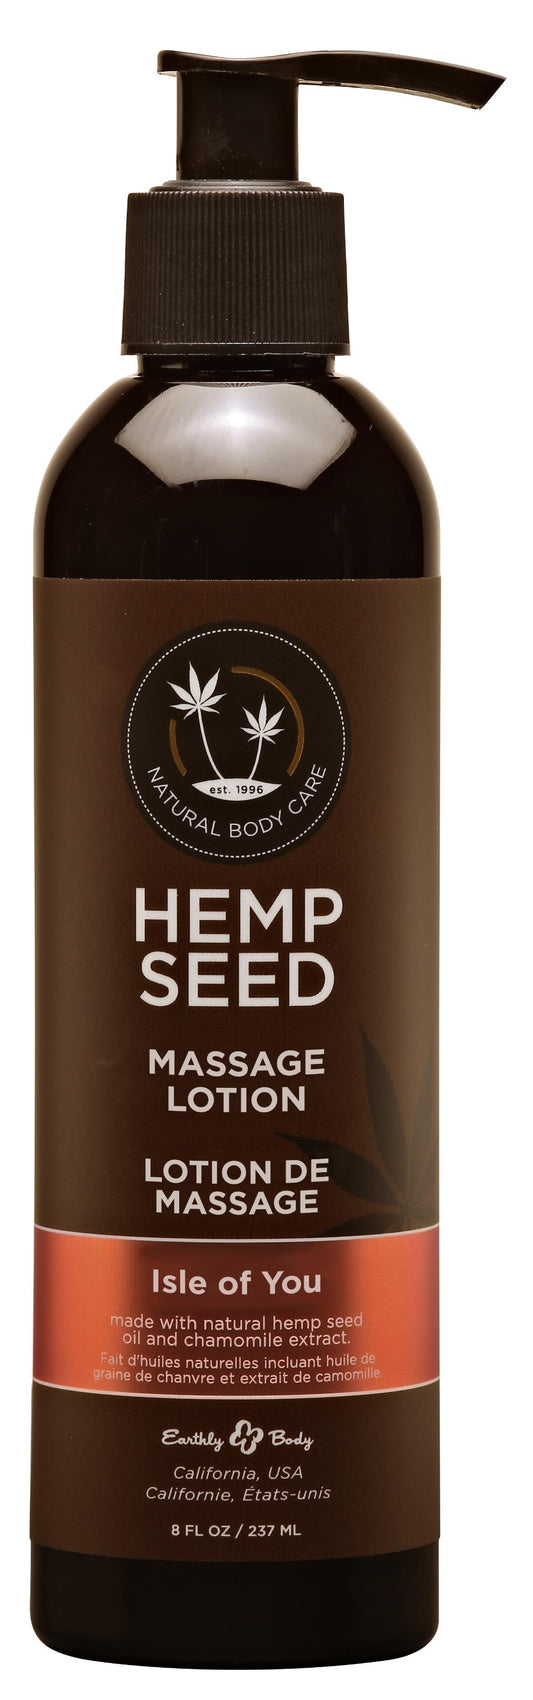 Hemp Seed Massage Lotion - Isle of You - 8 Fl. Oz. / 237ml